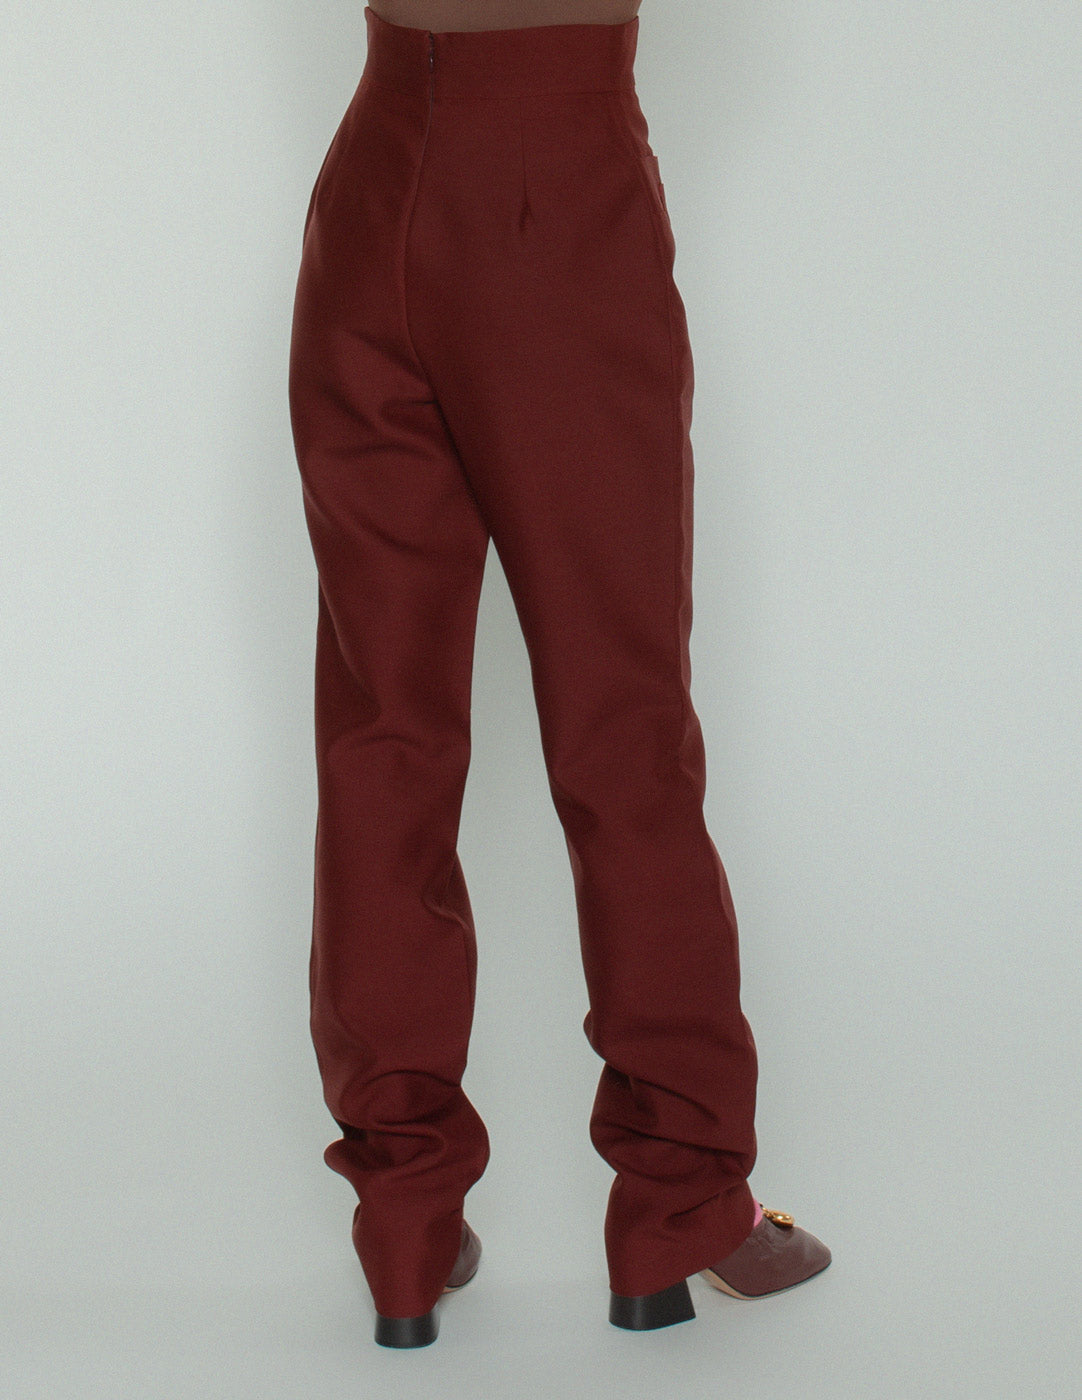 Jean Paul Gaultier burgundy high waisted trousers back detail